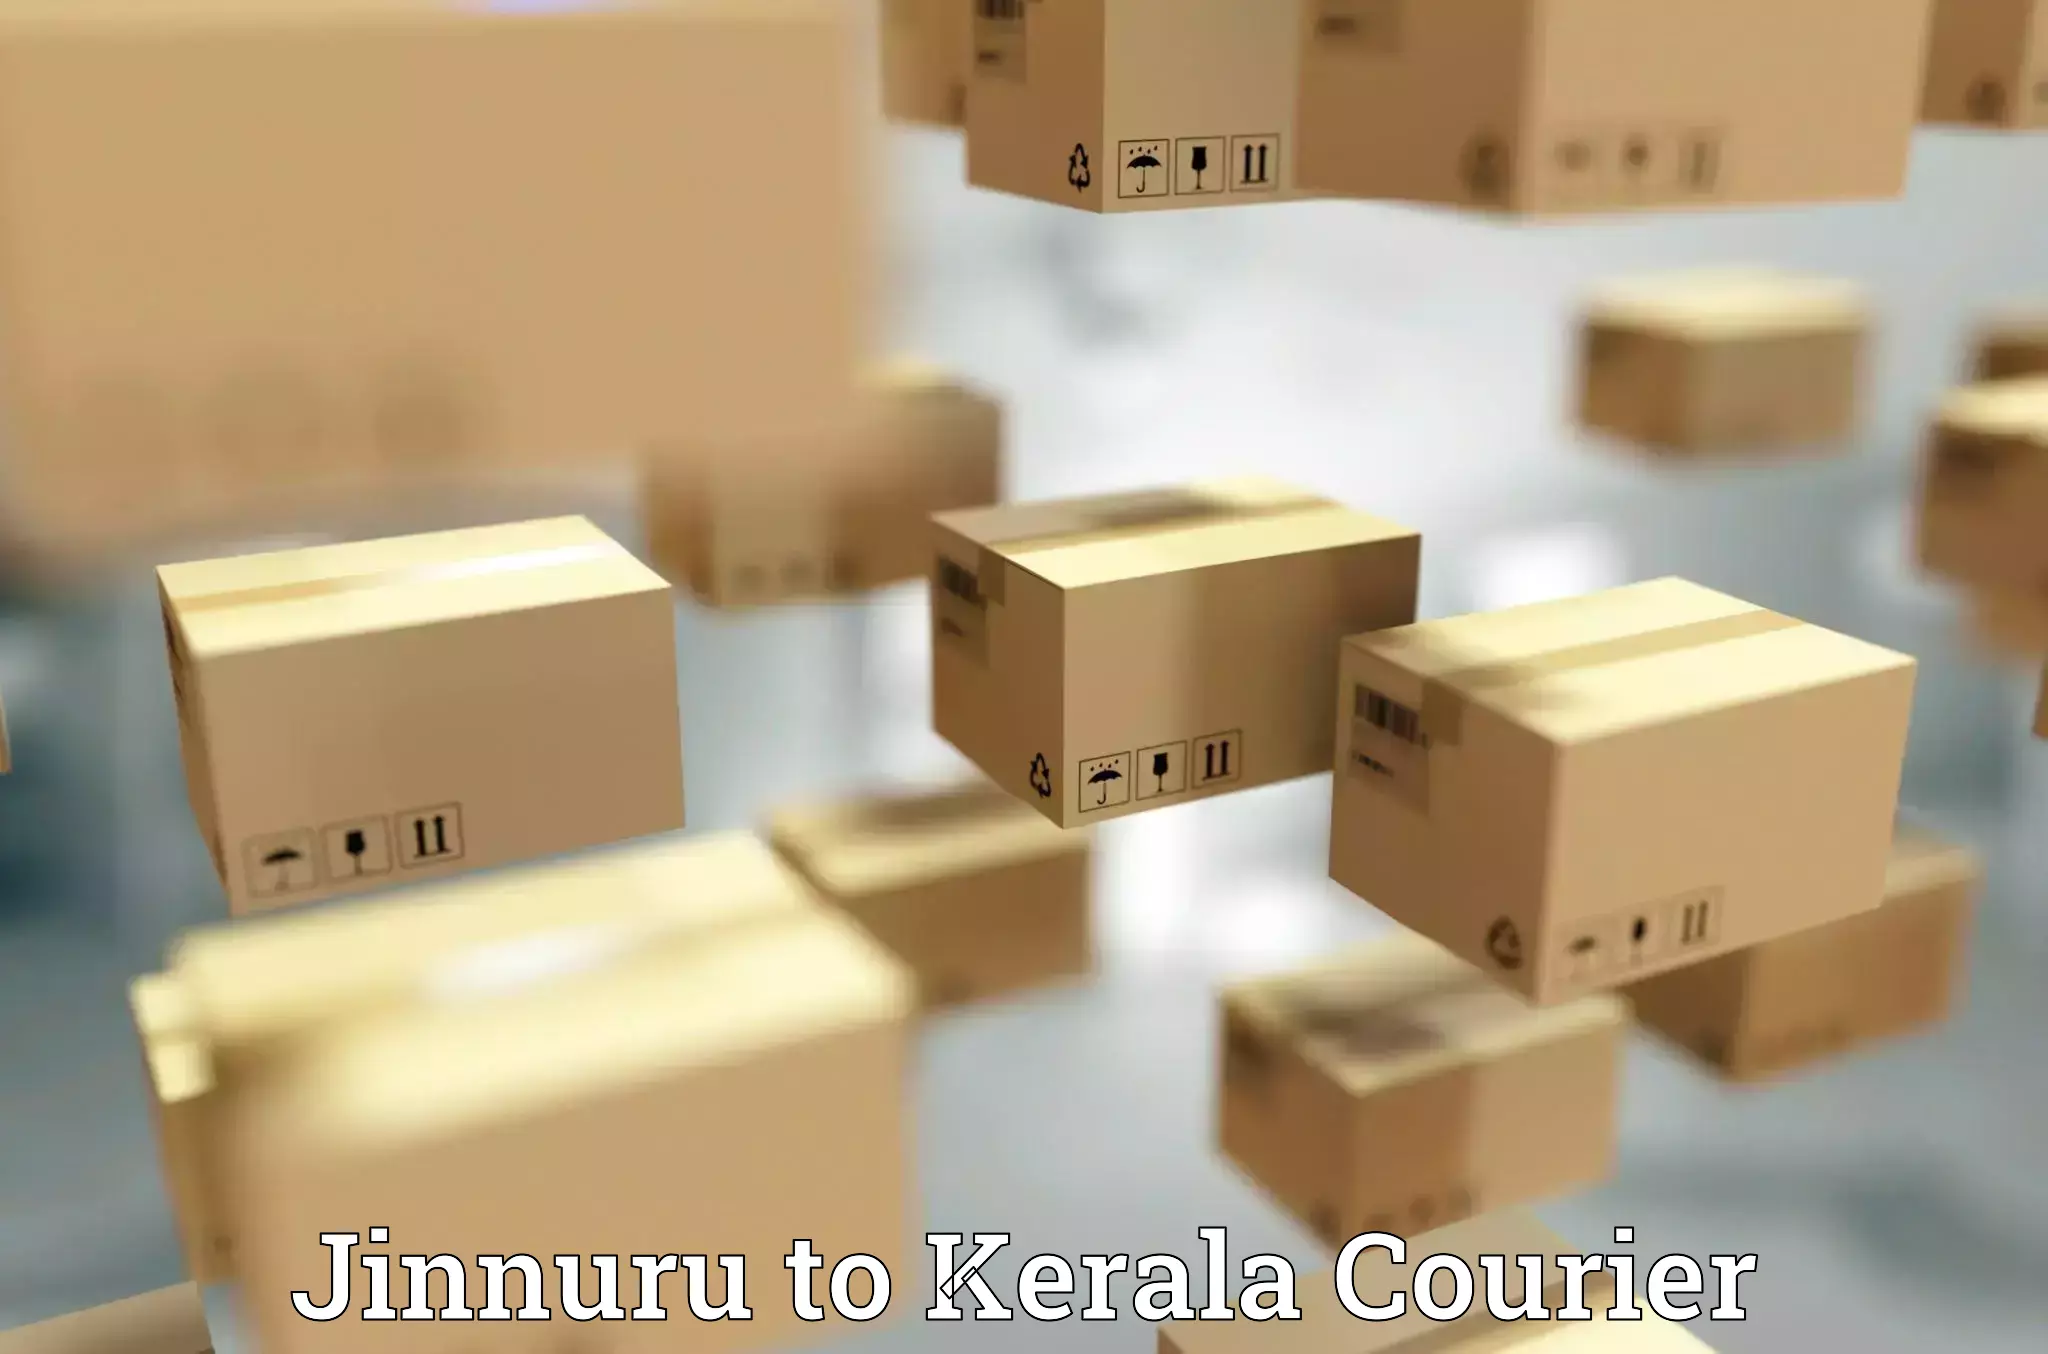 Speedy delivery service Jinnuru to Kerala